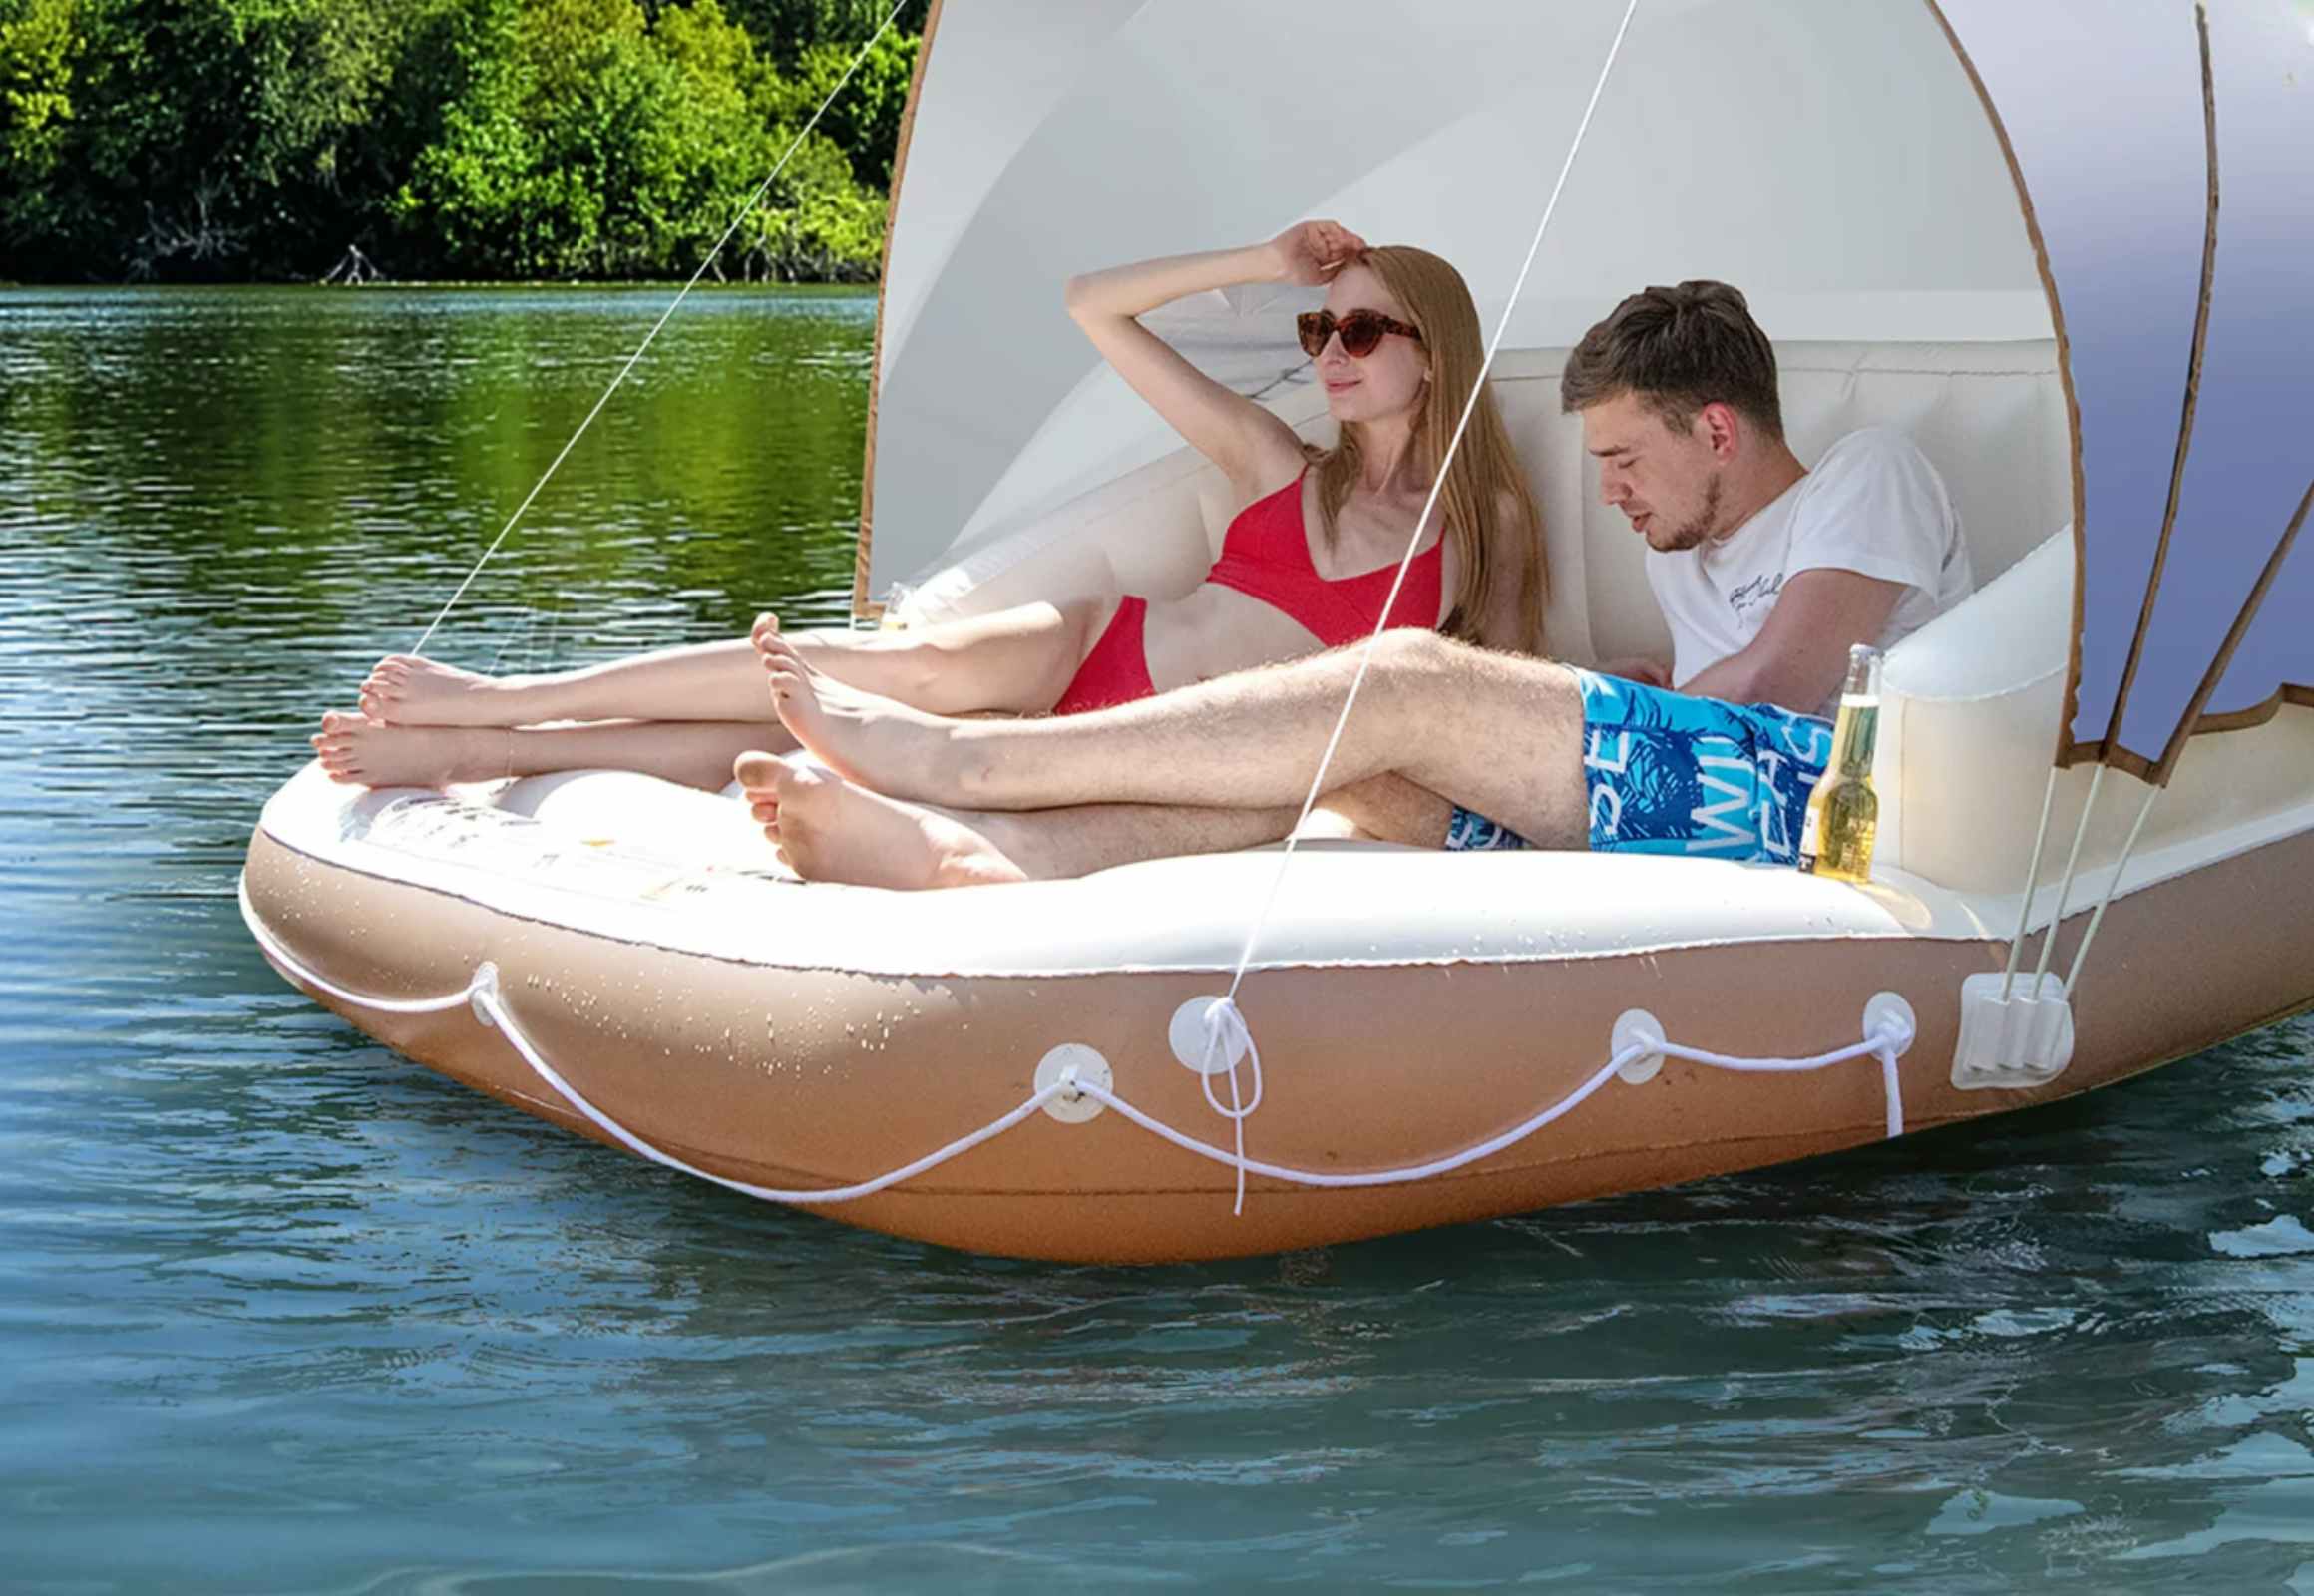 Costway Floating Island Lounge Raft, Now $80 at Walmart (Reg. $319)